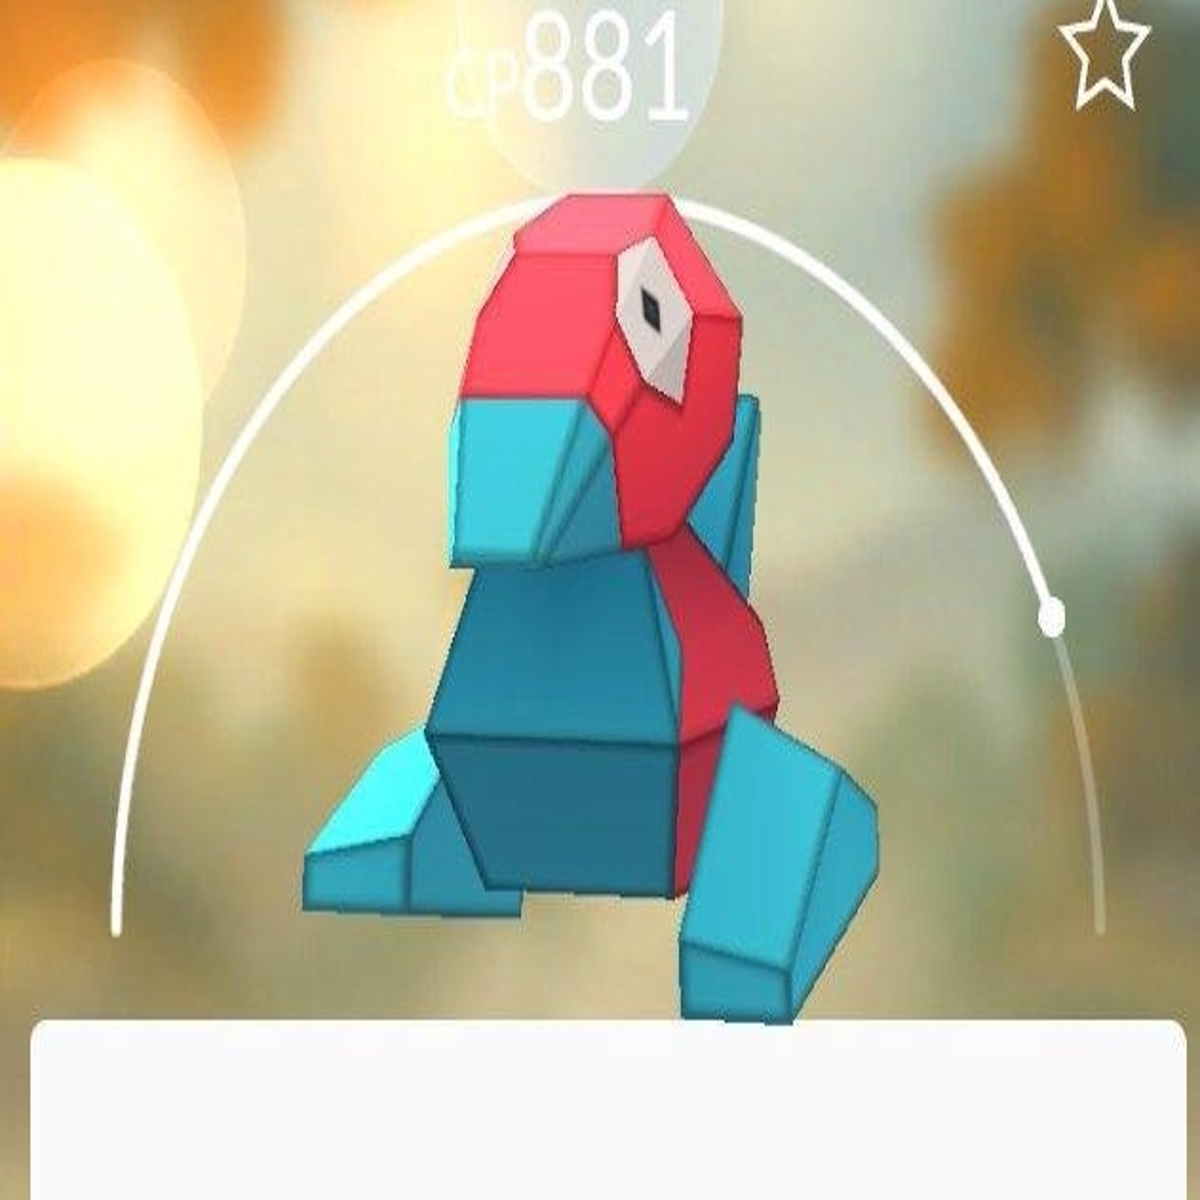 Pokémon Go Sinnoh Stone evolution guide - Polygon